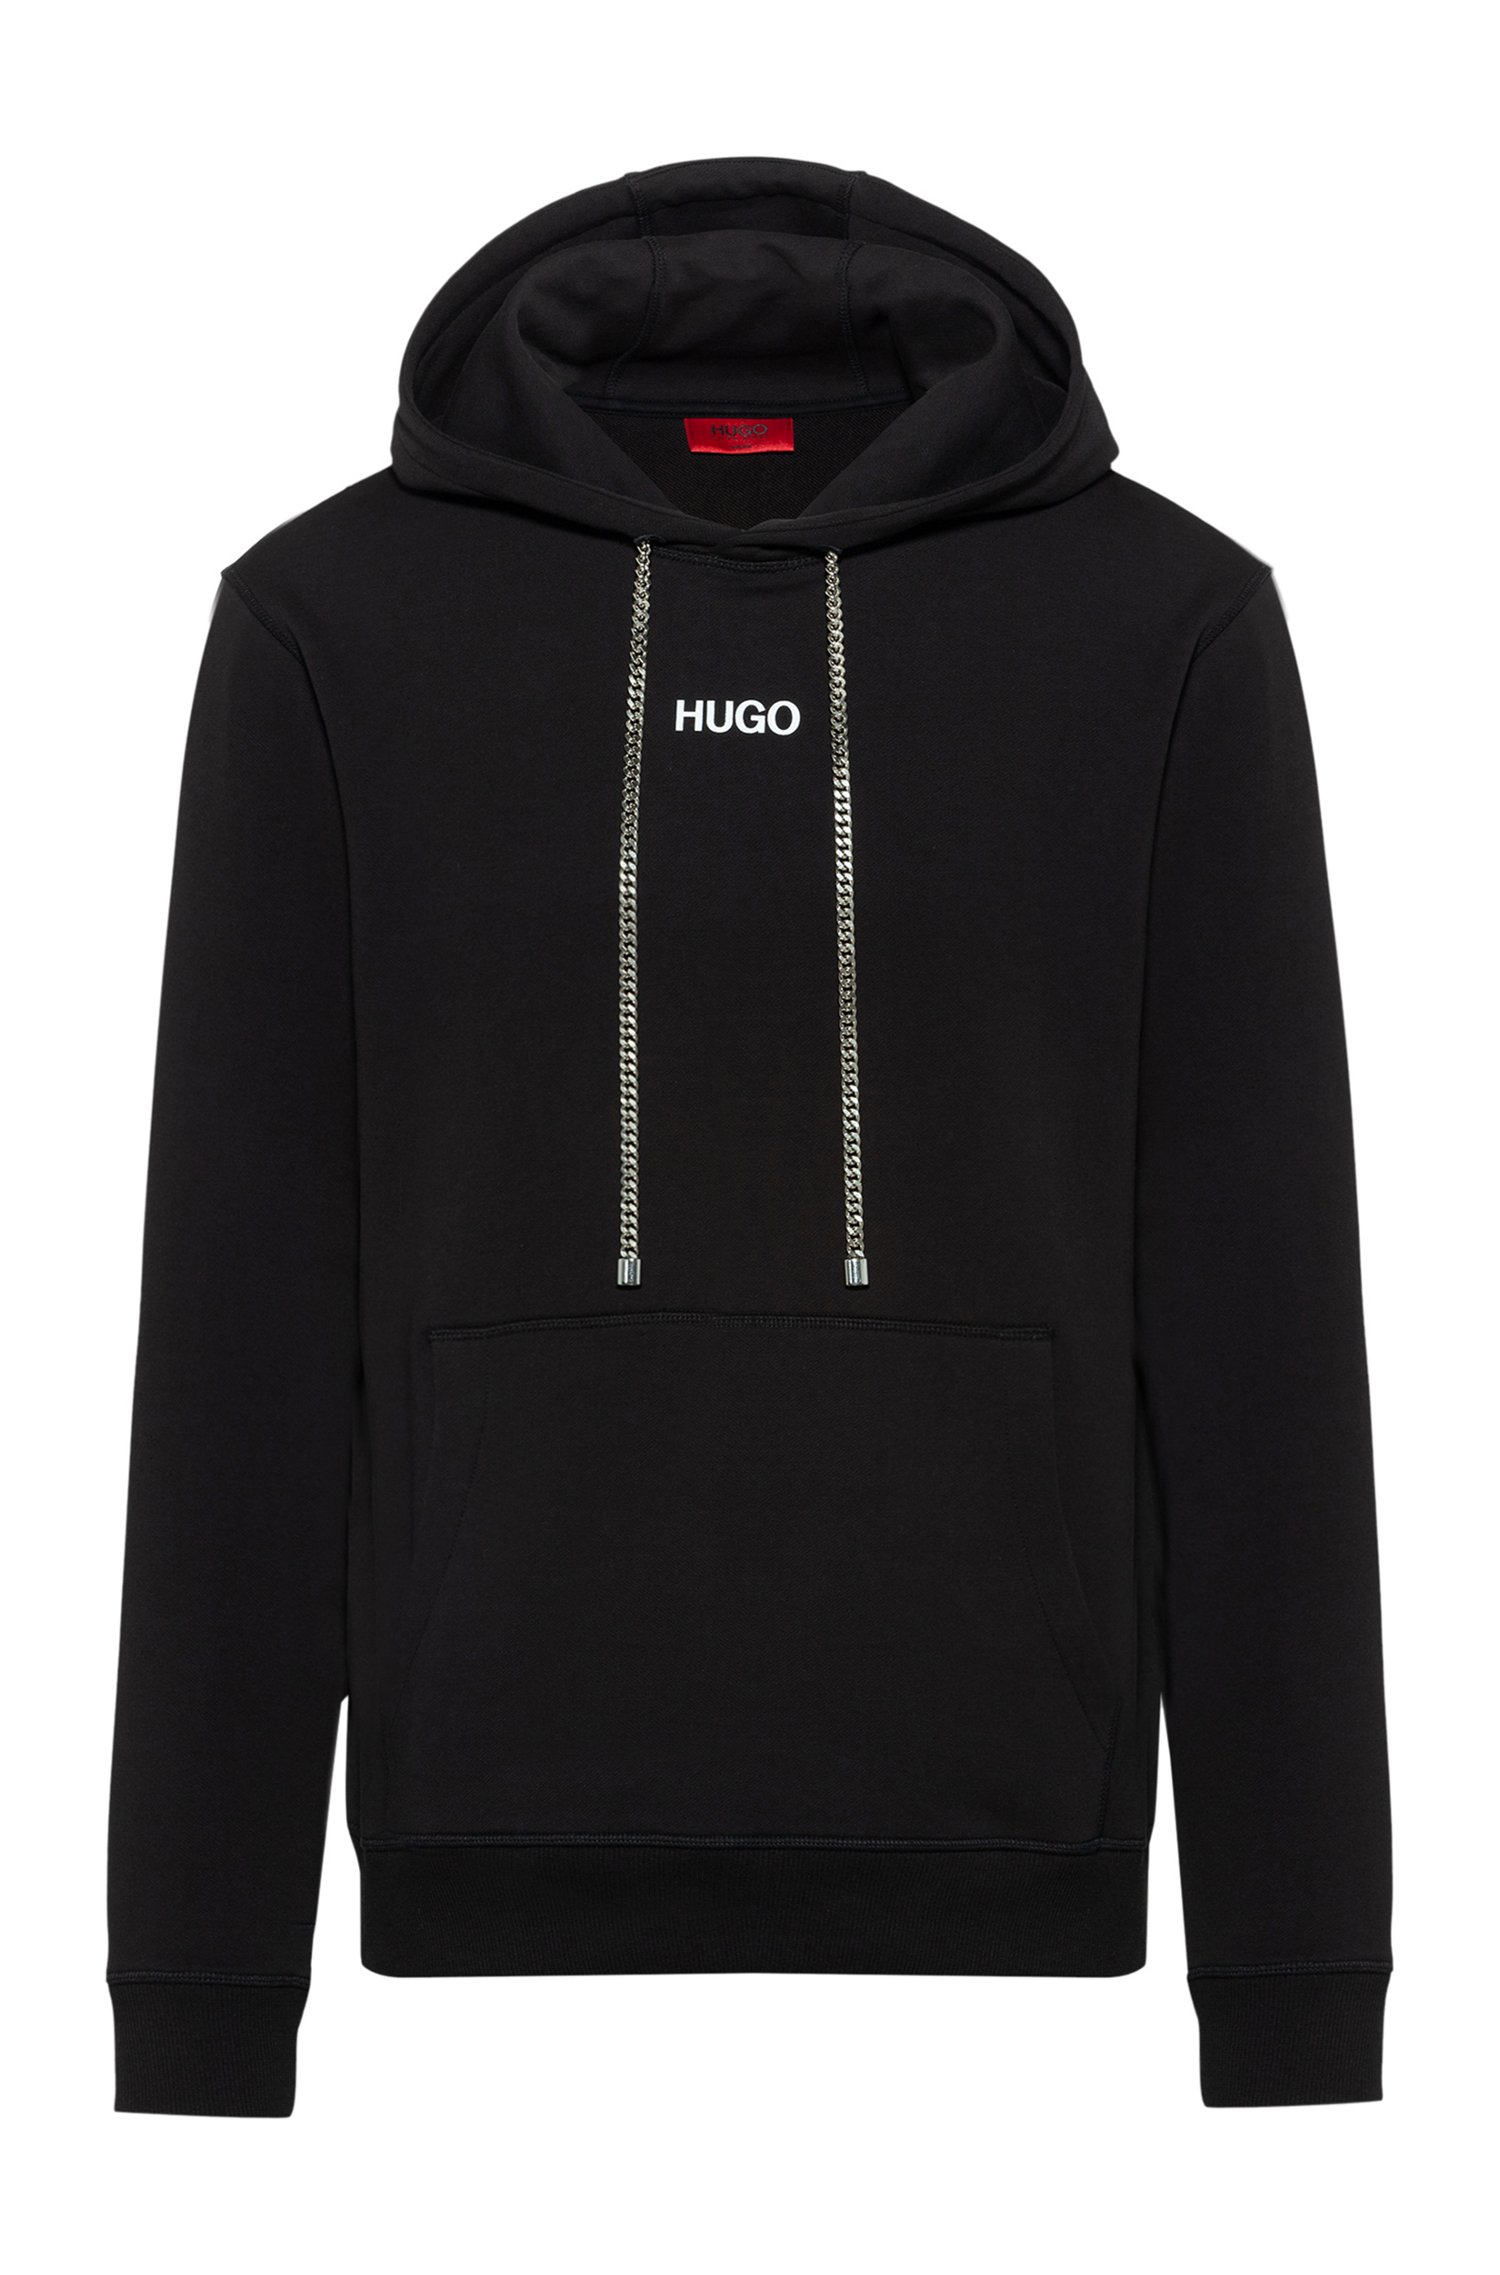 Hugo Boss DUTURE Sweat Top - Woods Designer Clothing